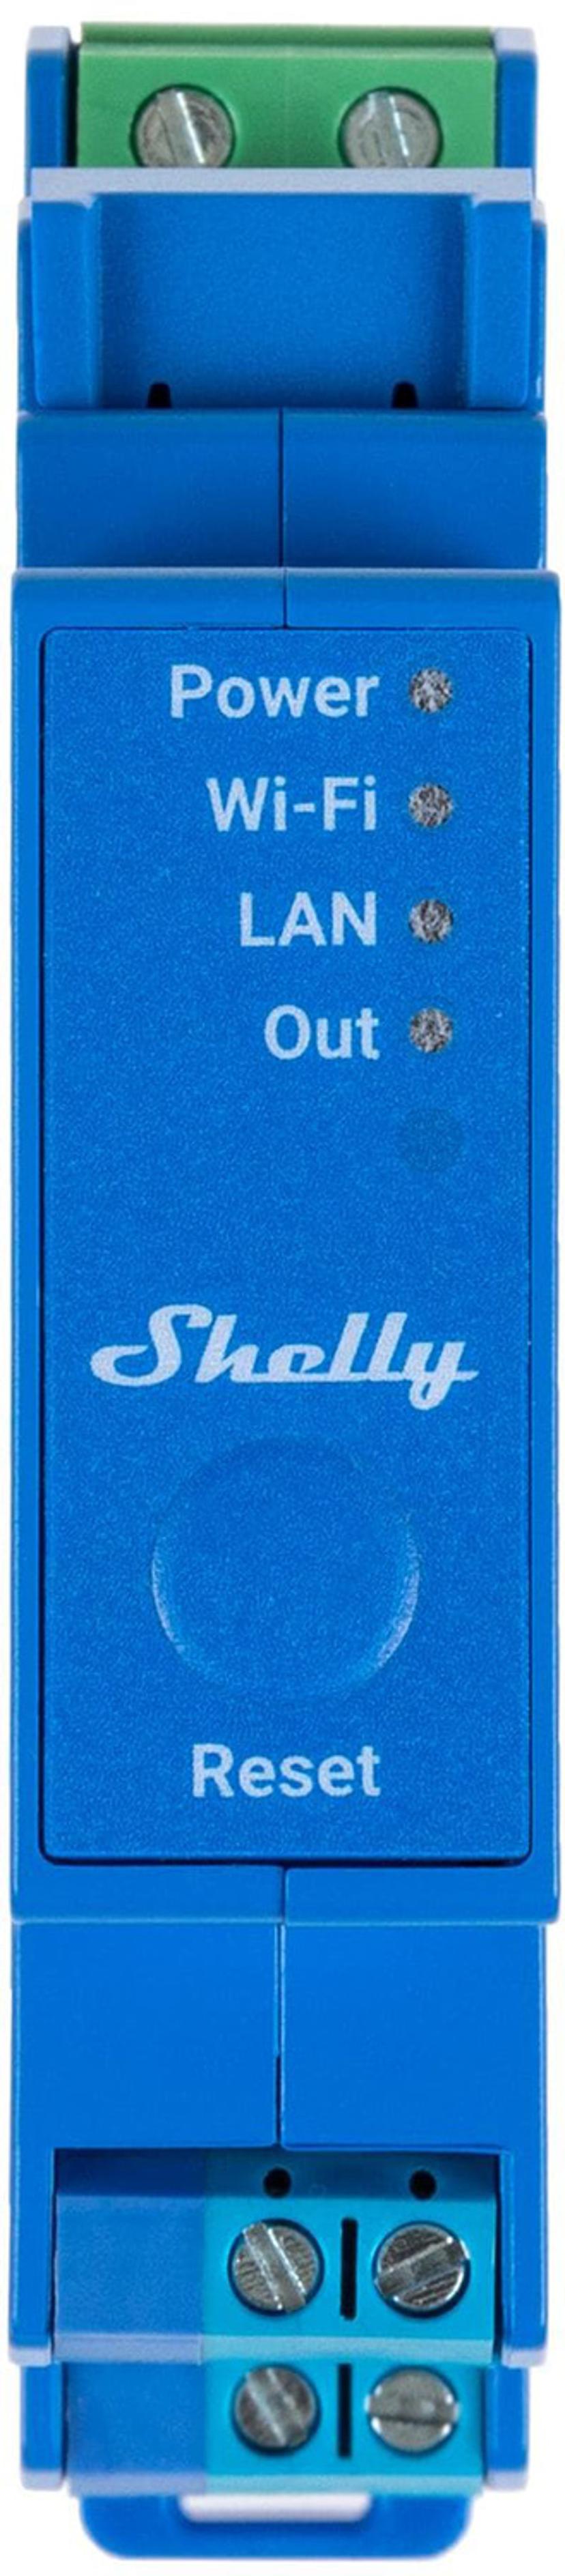 Shelly Pro 1 -DIN-rele